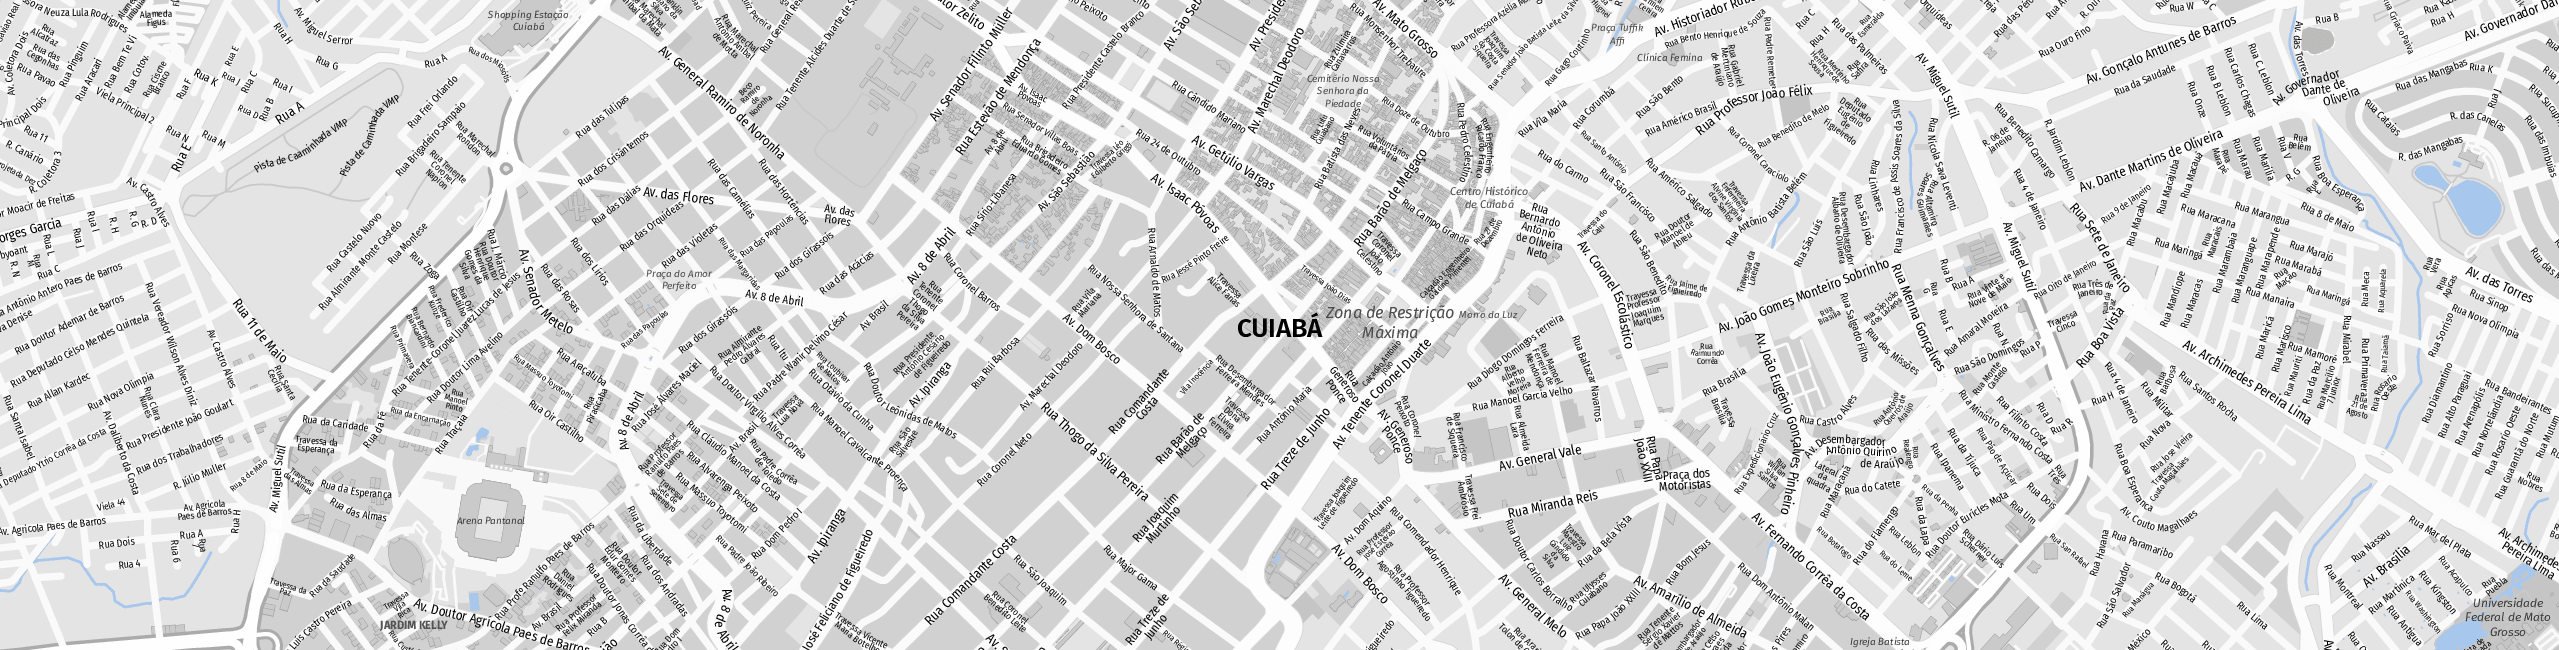 Stadtplan Cuiabá zum Downloaden.